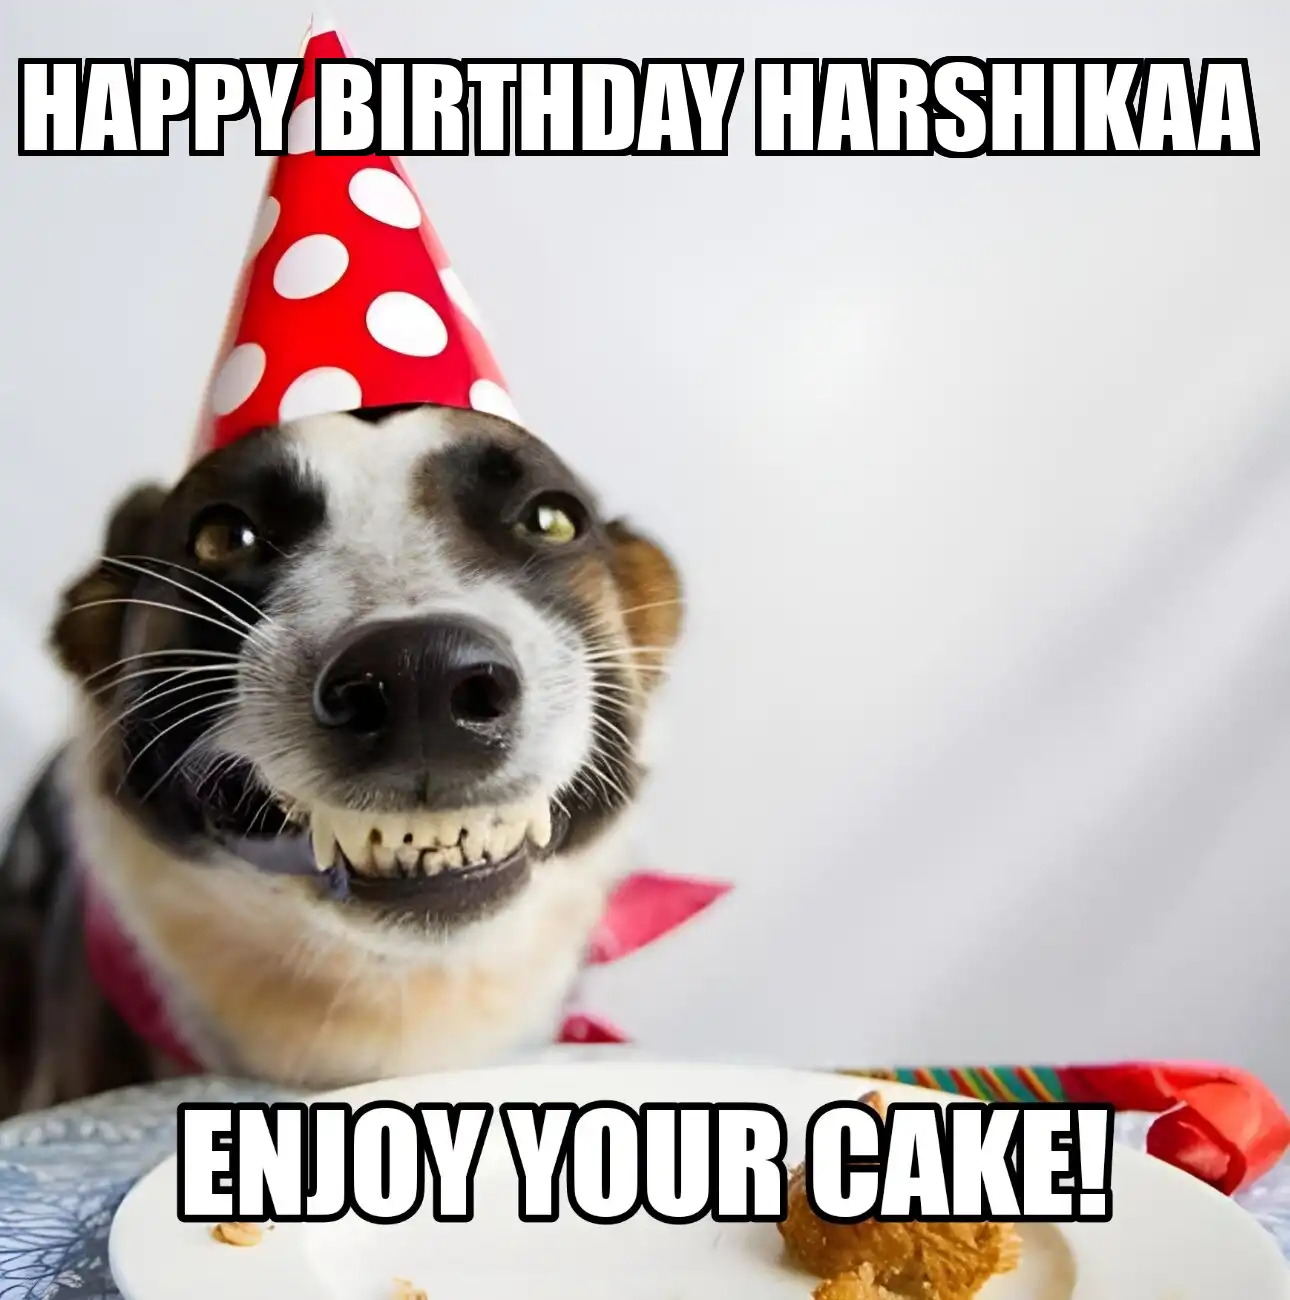 Happy Birthday Harshikaa Enjoy Your Cake Dog Meme